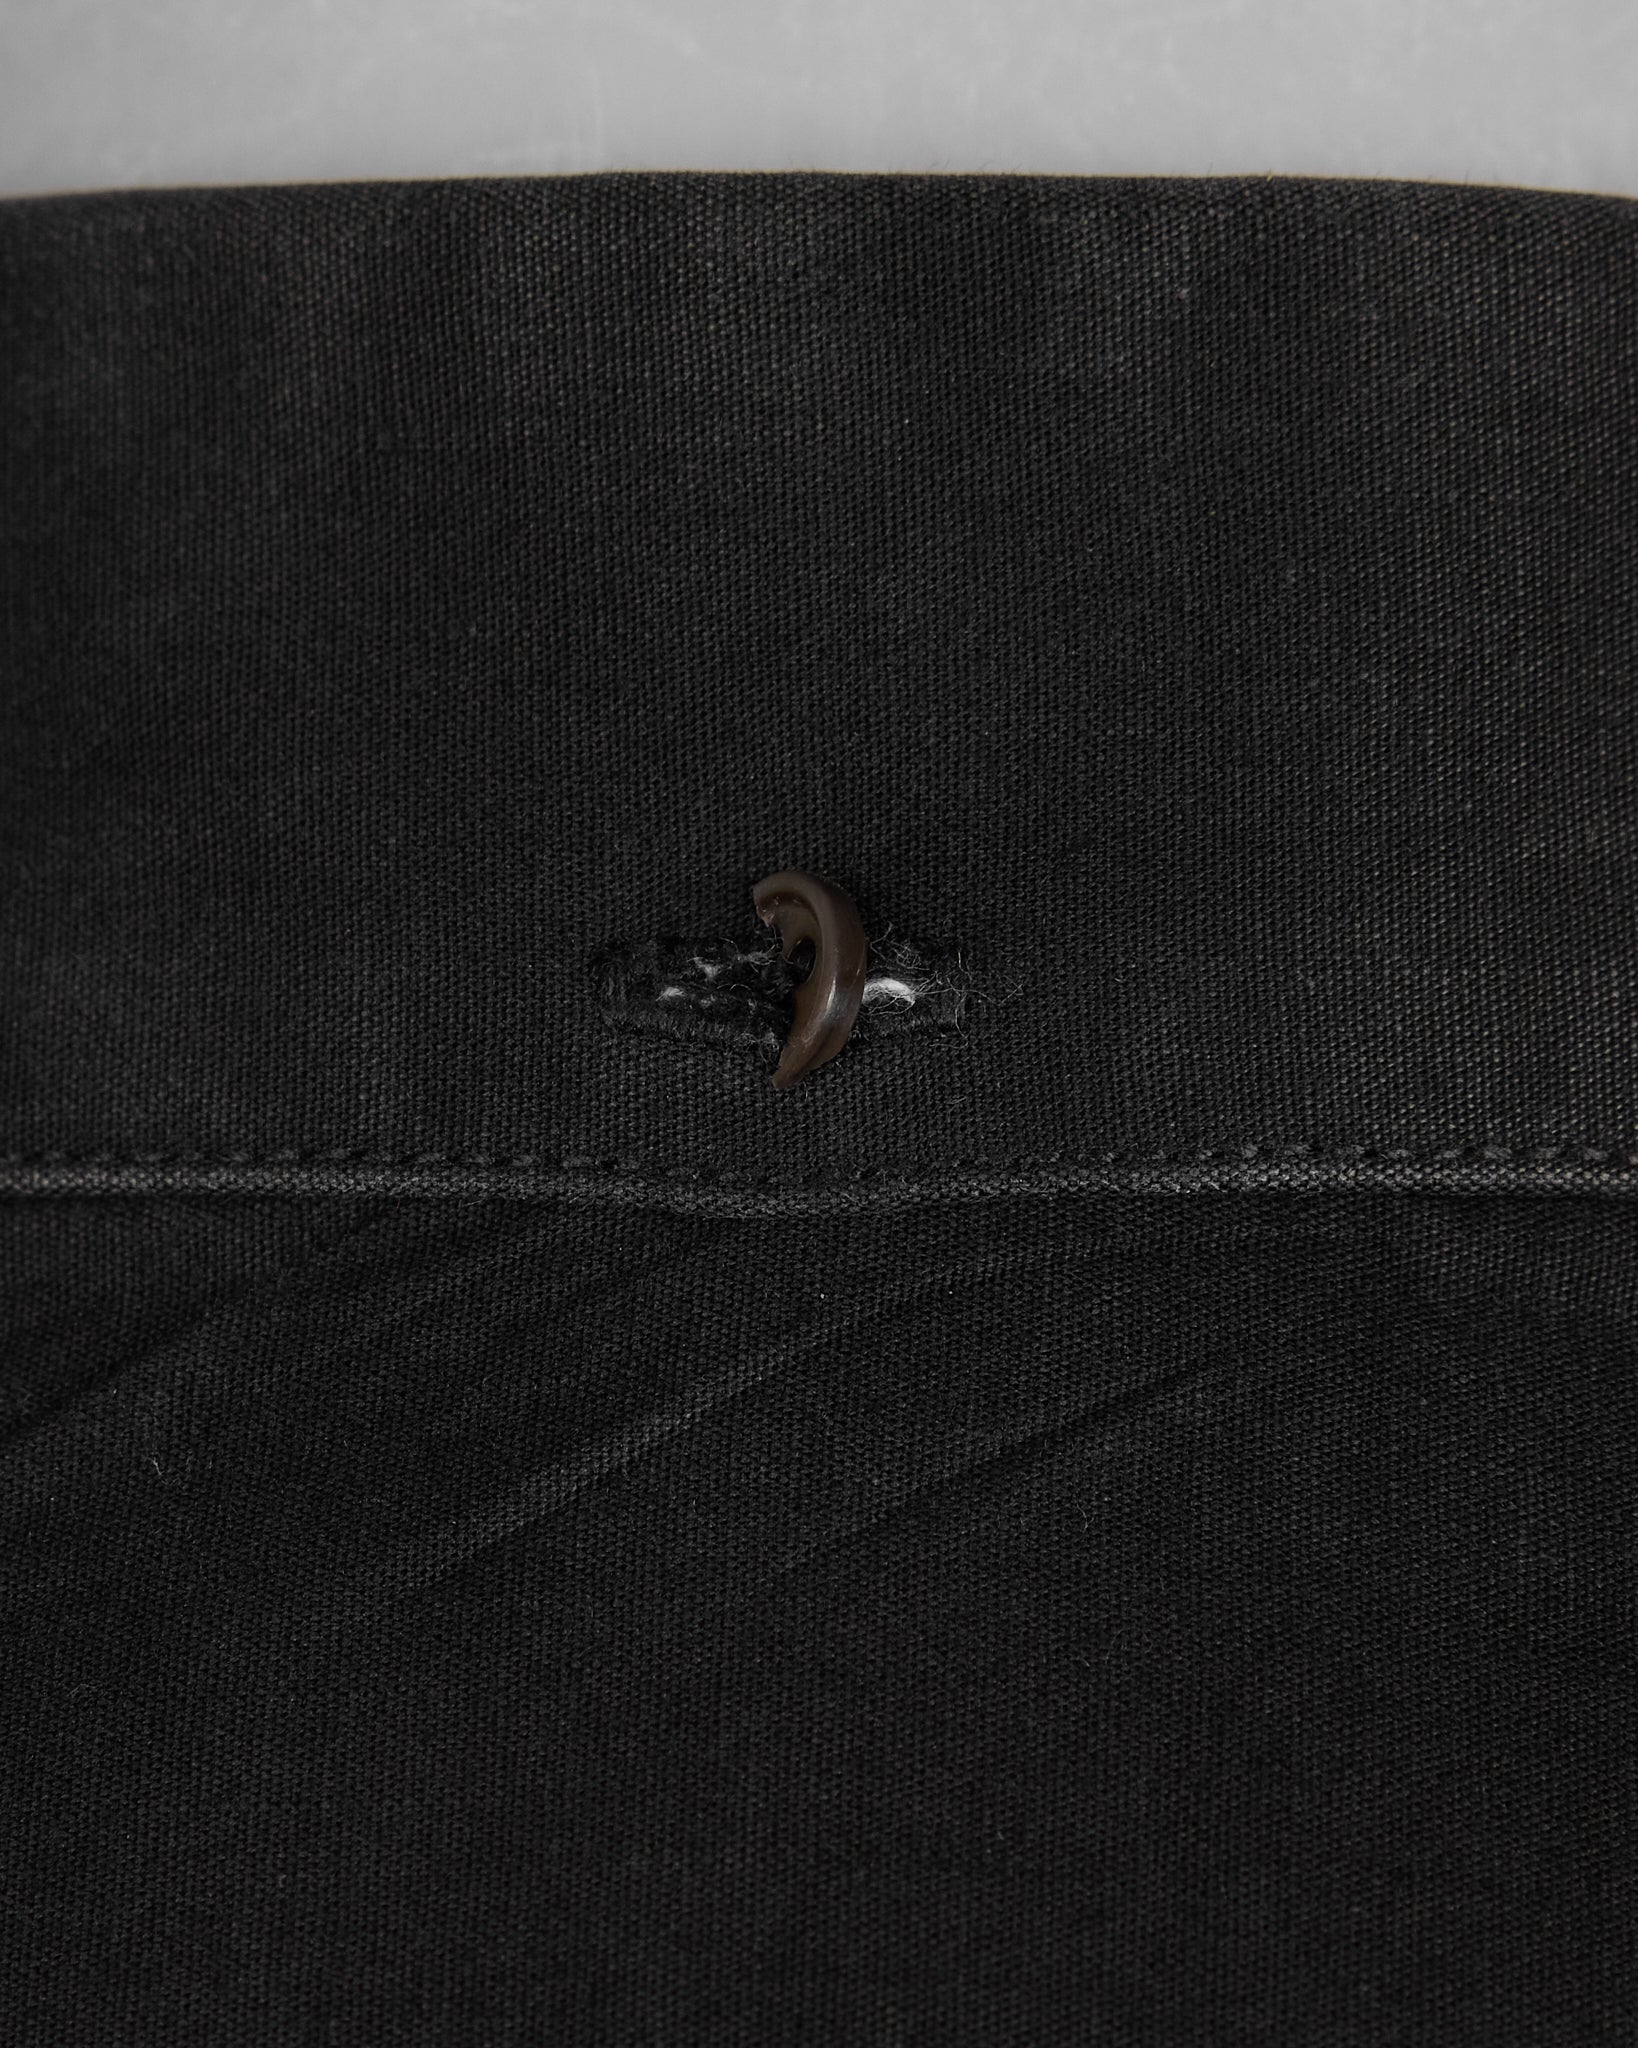 Raf Simons Black Button Down Shirt - AW00 "Confusion" damaged button detail photo